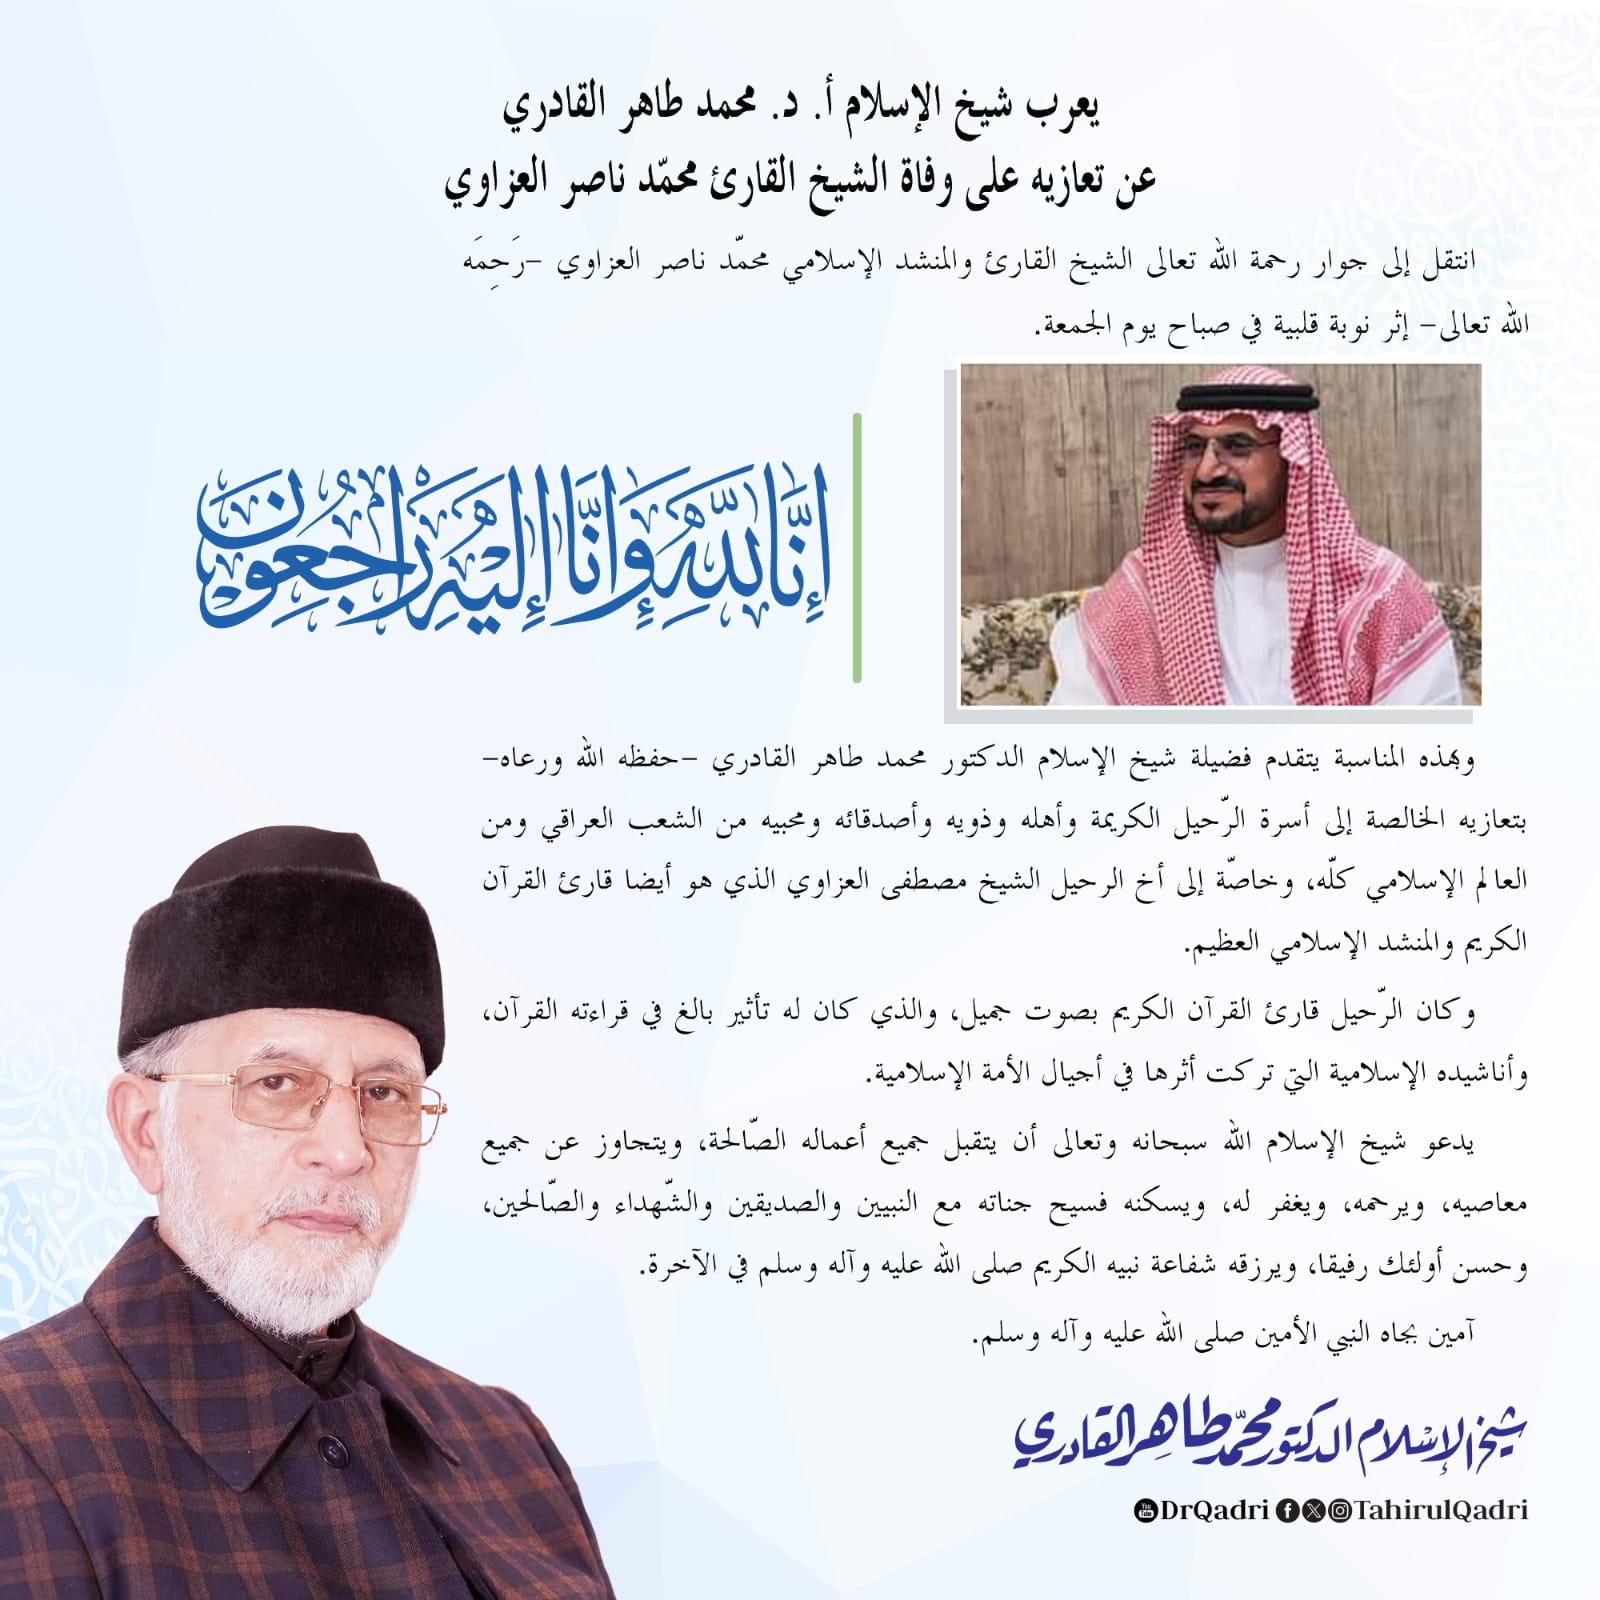 Dr Tahir Qadri expresses his condolences on the death of the Sheikh Muhammad Nasser Al Azzawi